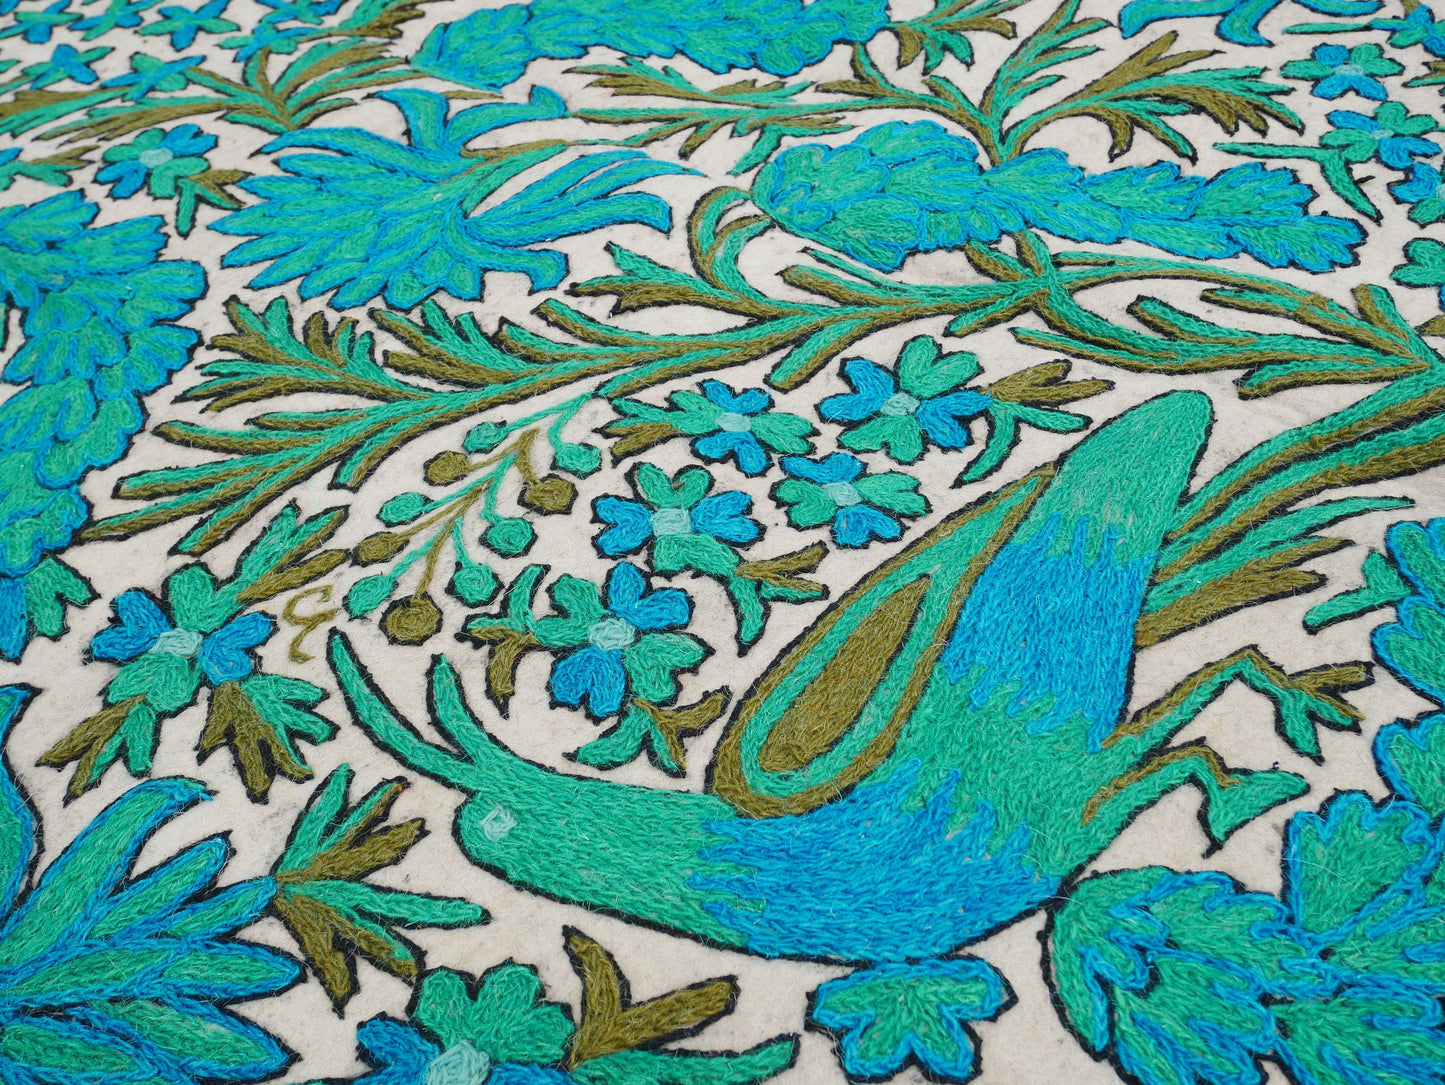 Indian wool rug - felt rug "Mughal garden" | traditional "Kashmiri Namda rug- hand felted, embroidered 6x4  ft